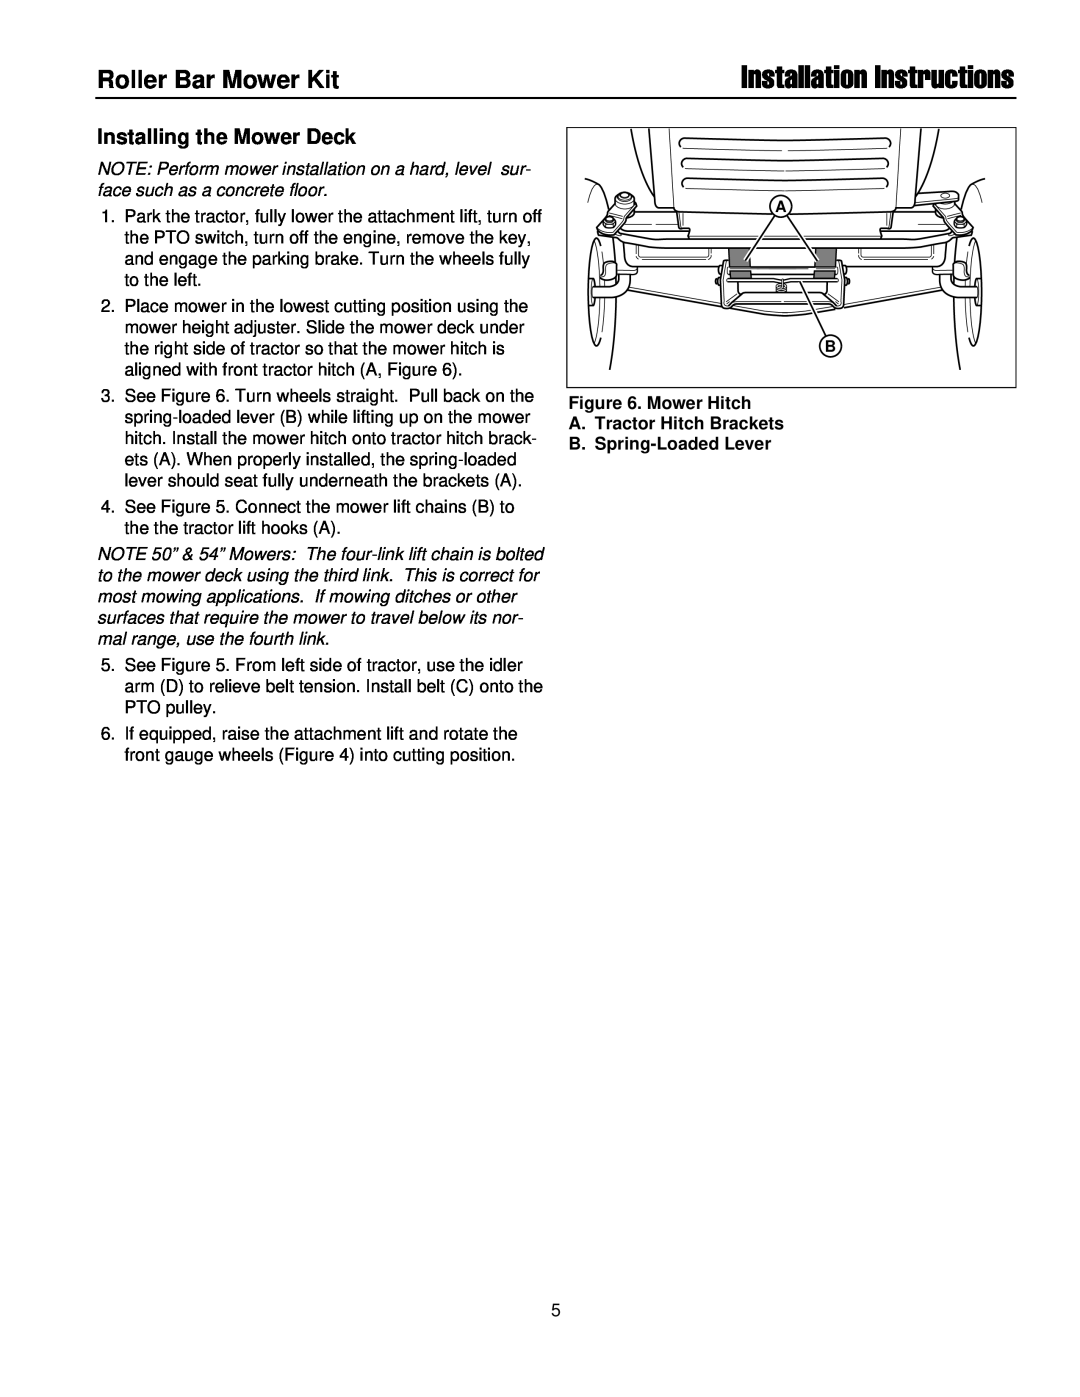 Briggs & Stratton 1687079 Roller Bar Mower Kit, Installing the Mower Deck, Installation Instructions 